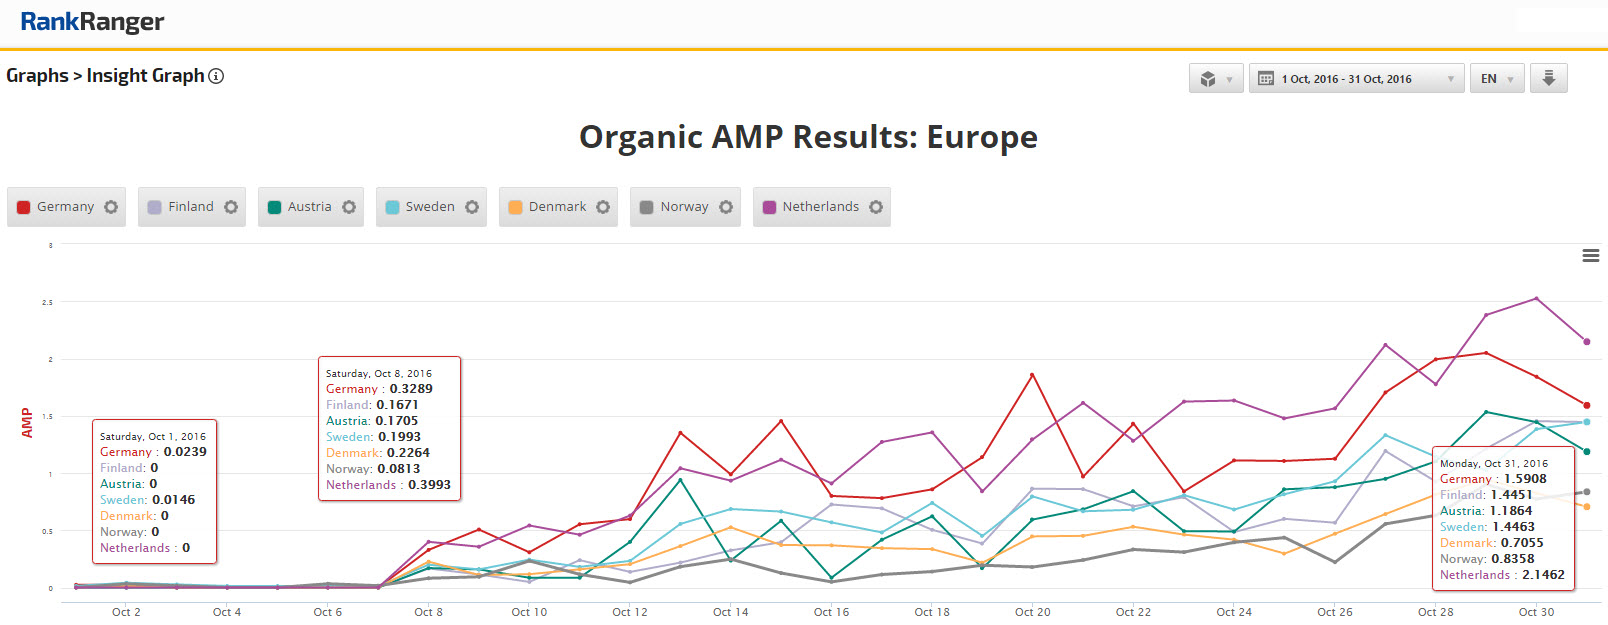 Organic AMP Results - Europe 